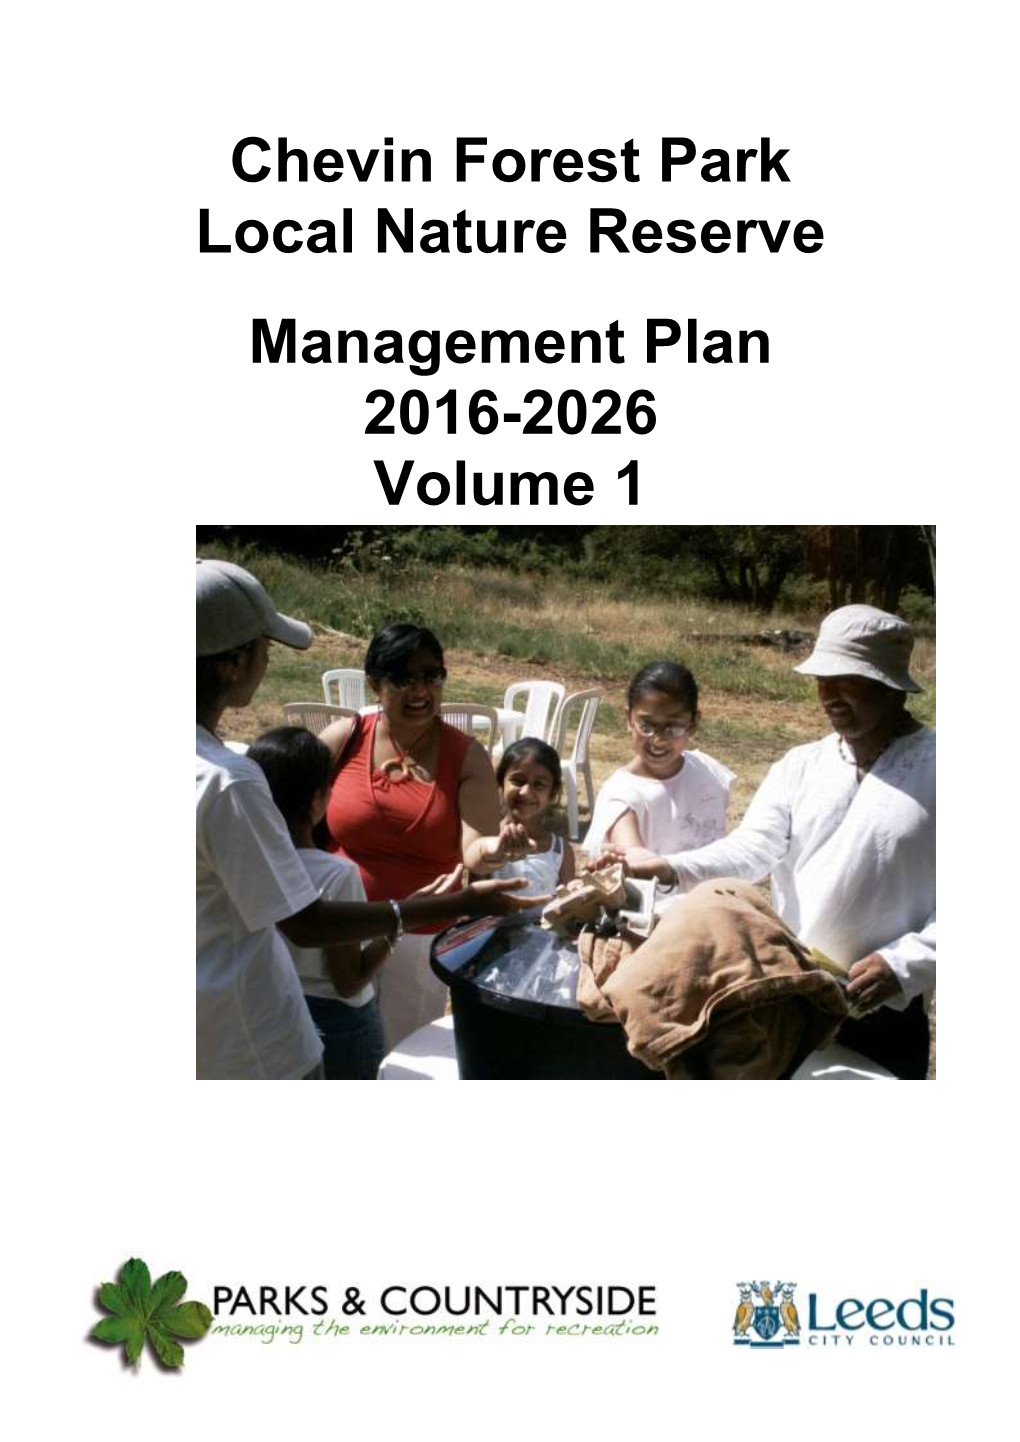 Chevin Forest Park Local Nature Reserve Management Plan 2016